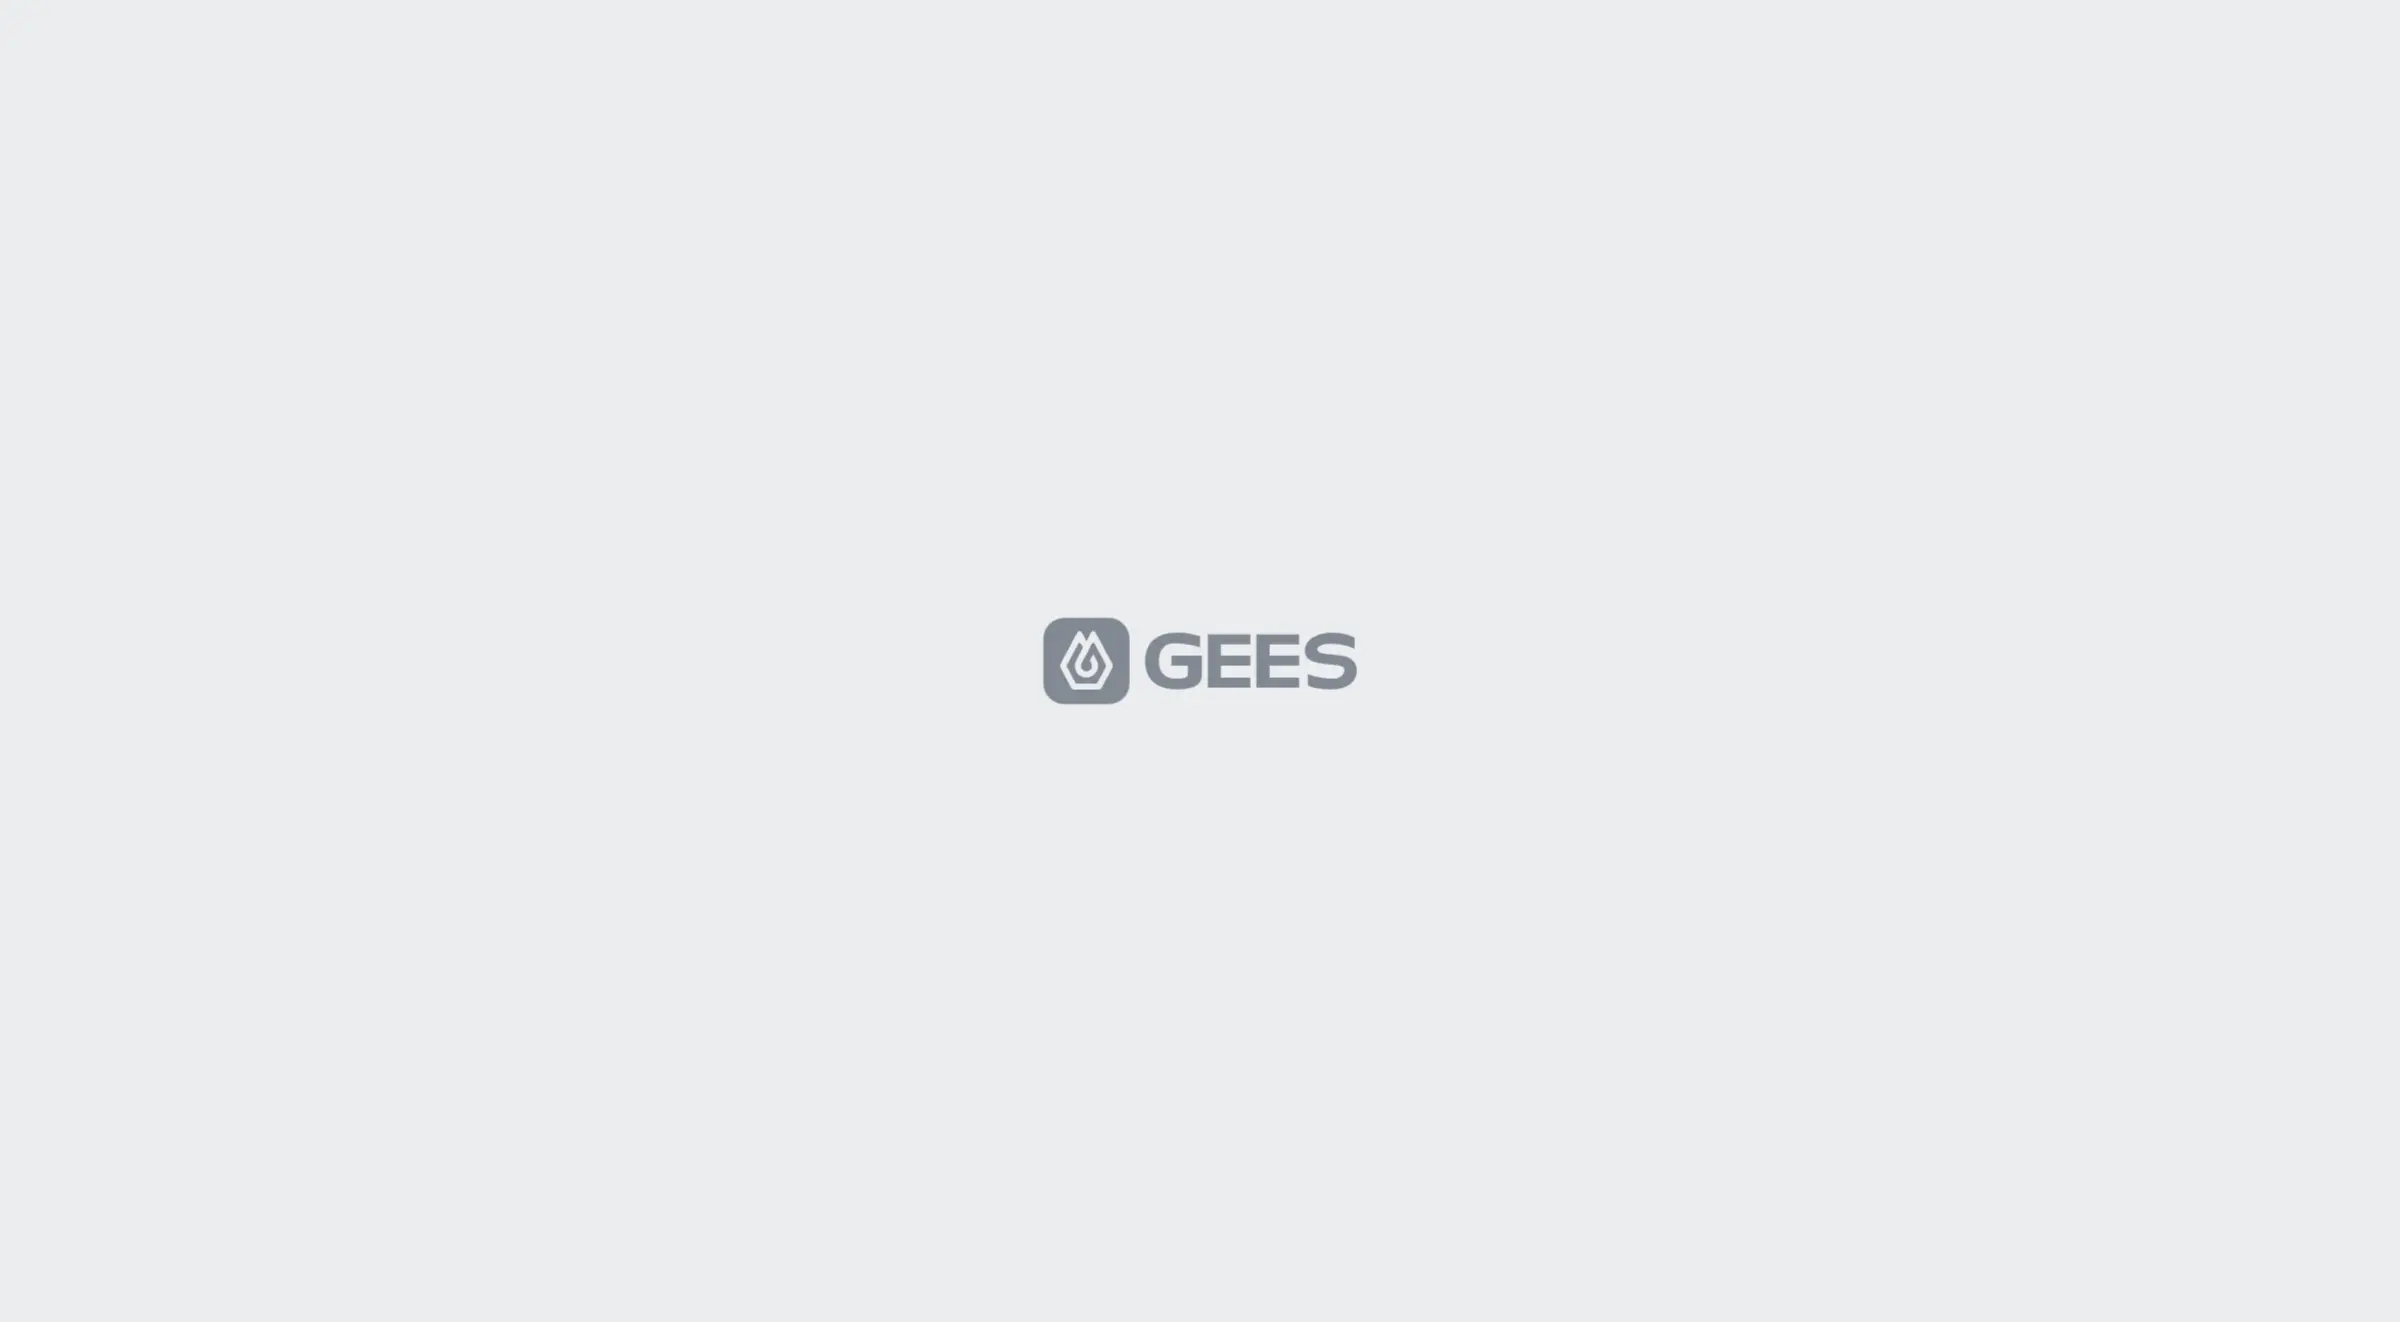 GEES丨An all-in-one AI design platform